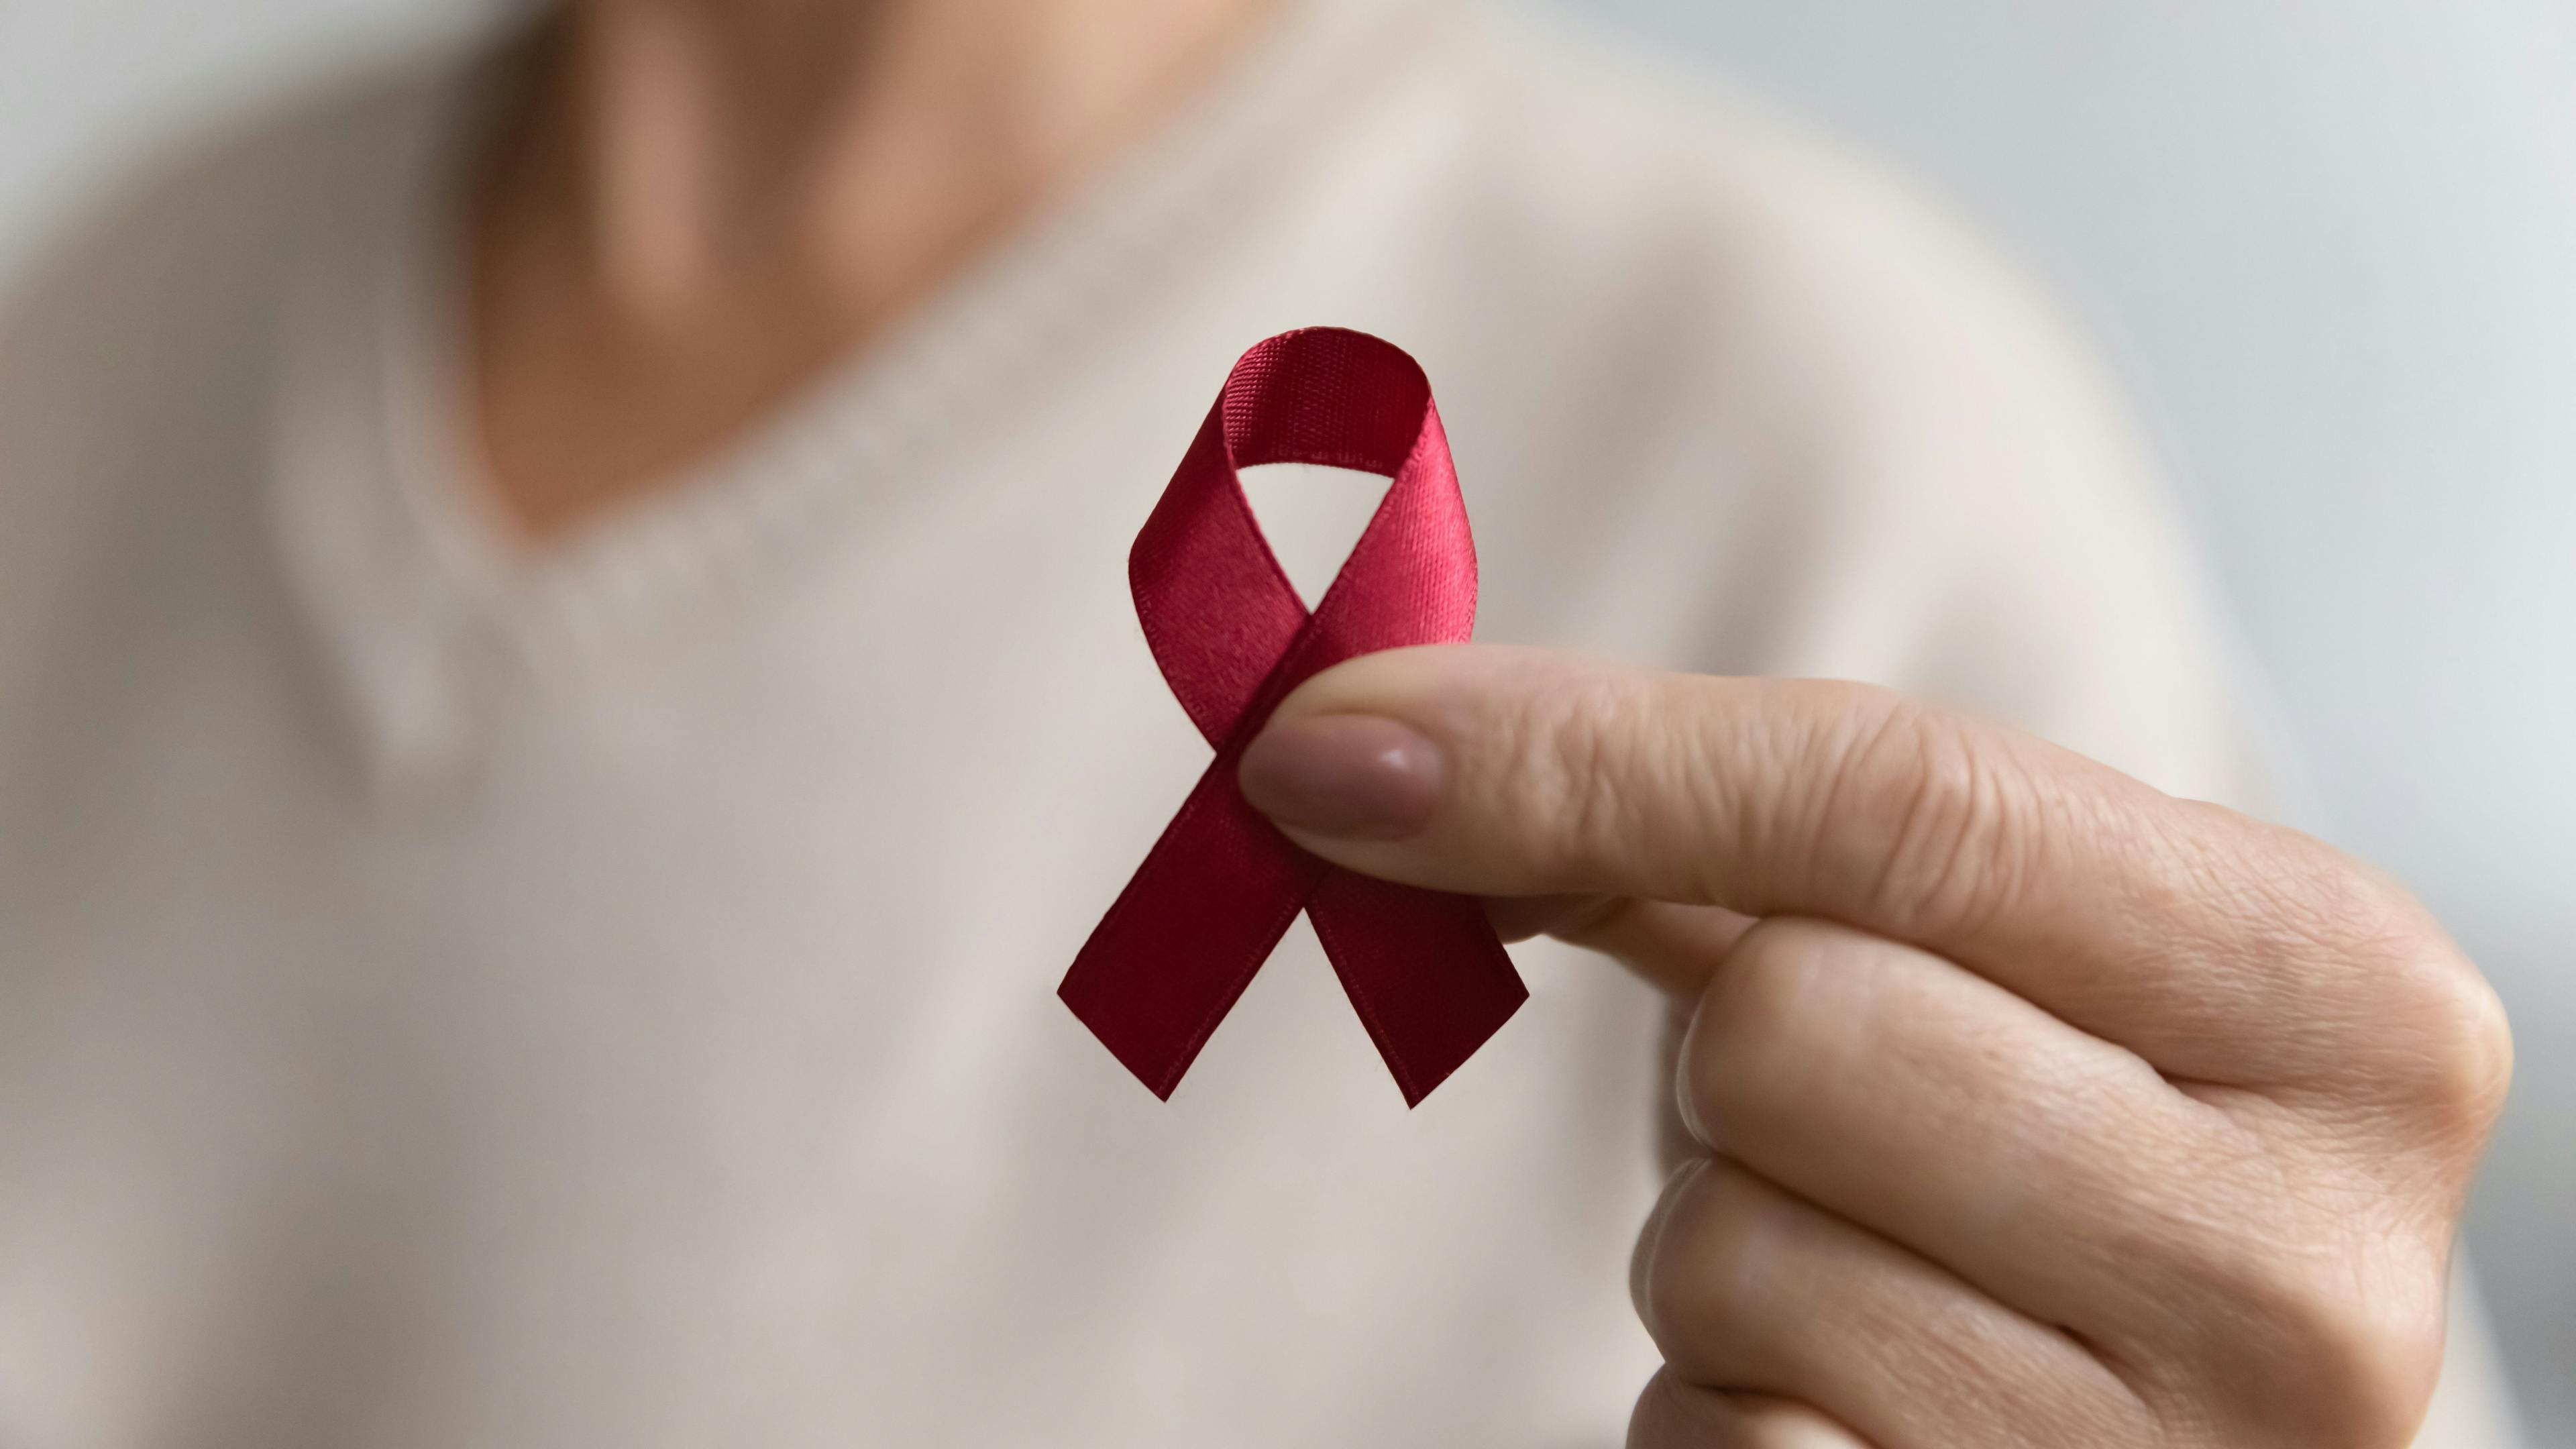 HIV Awareness Ribbon | Image credit: fizkes - stock.adobe.com